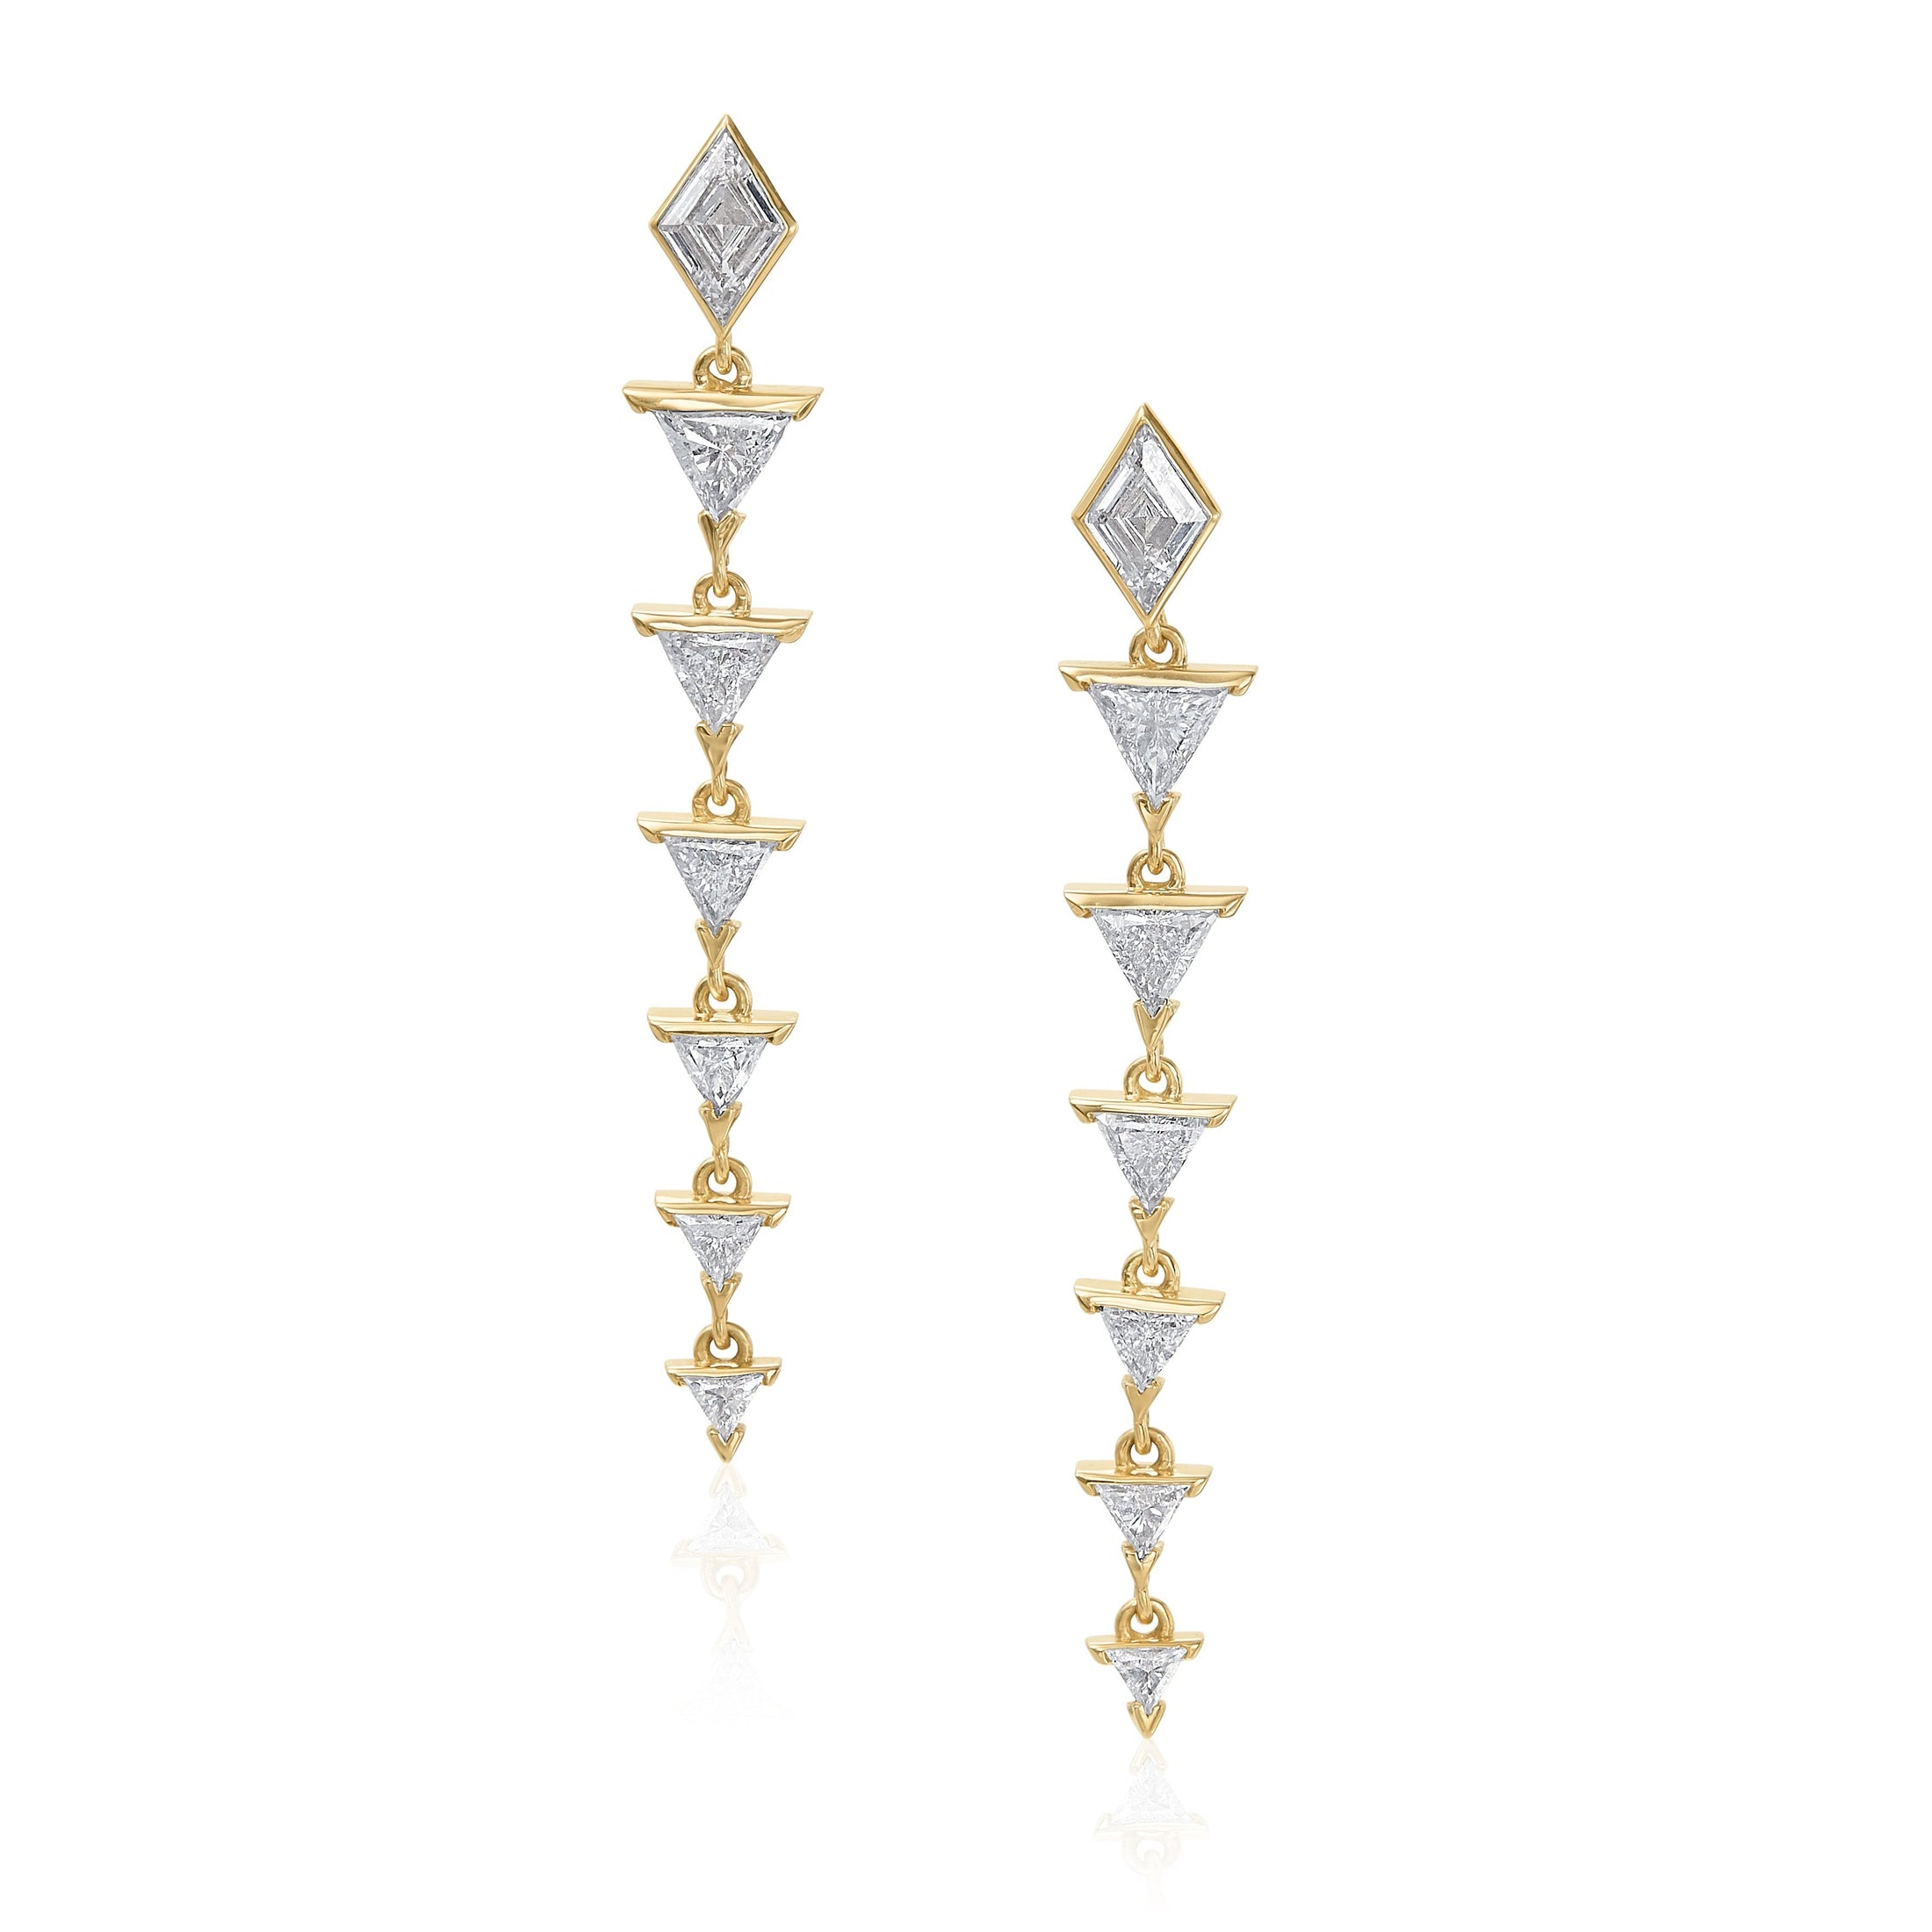 Tatau Drop Earrings with Lozenge and Triangle Shaped Diamonds